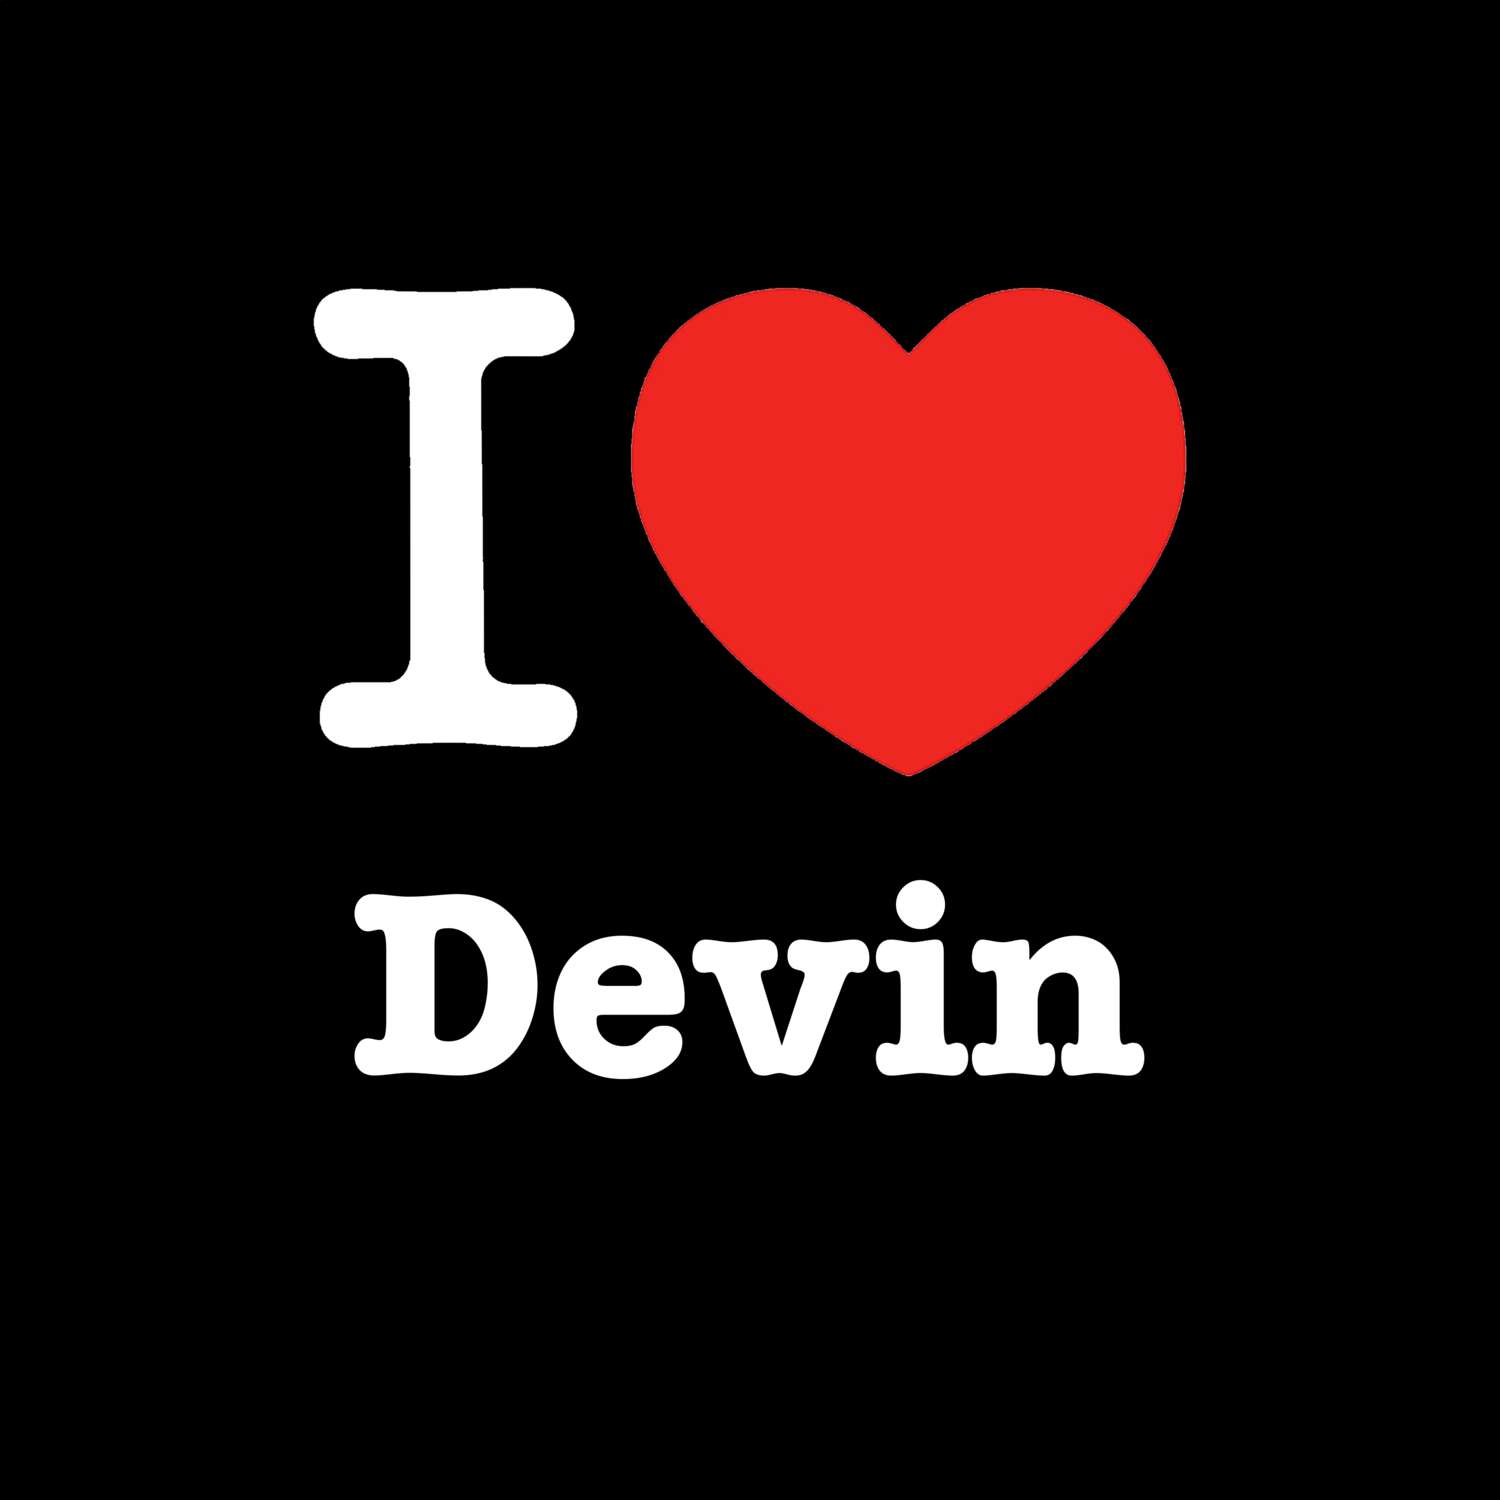 Devin T-Shirt »I love«